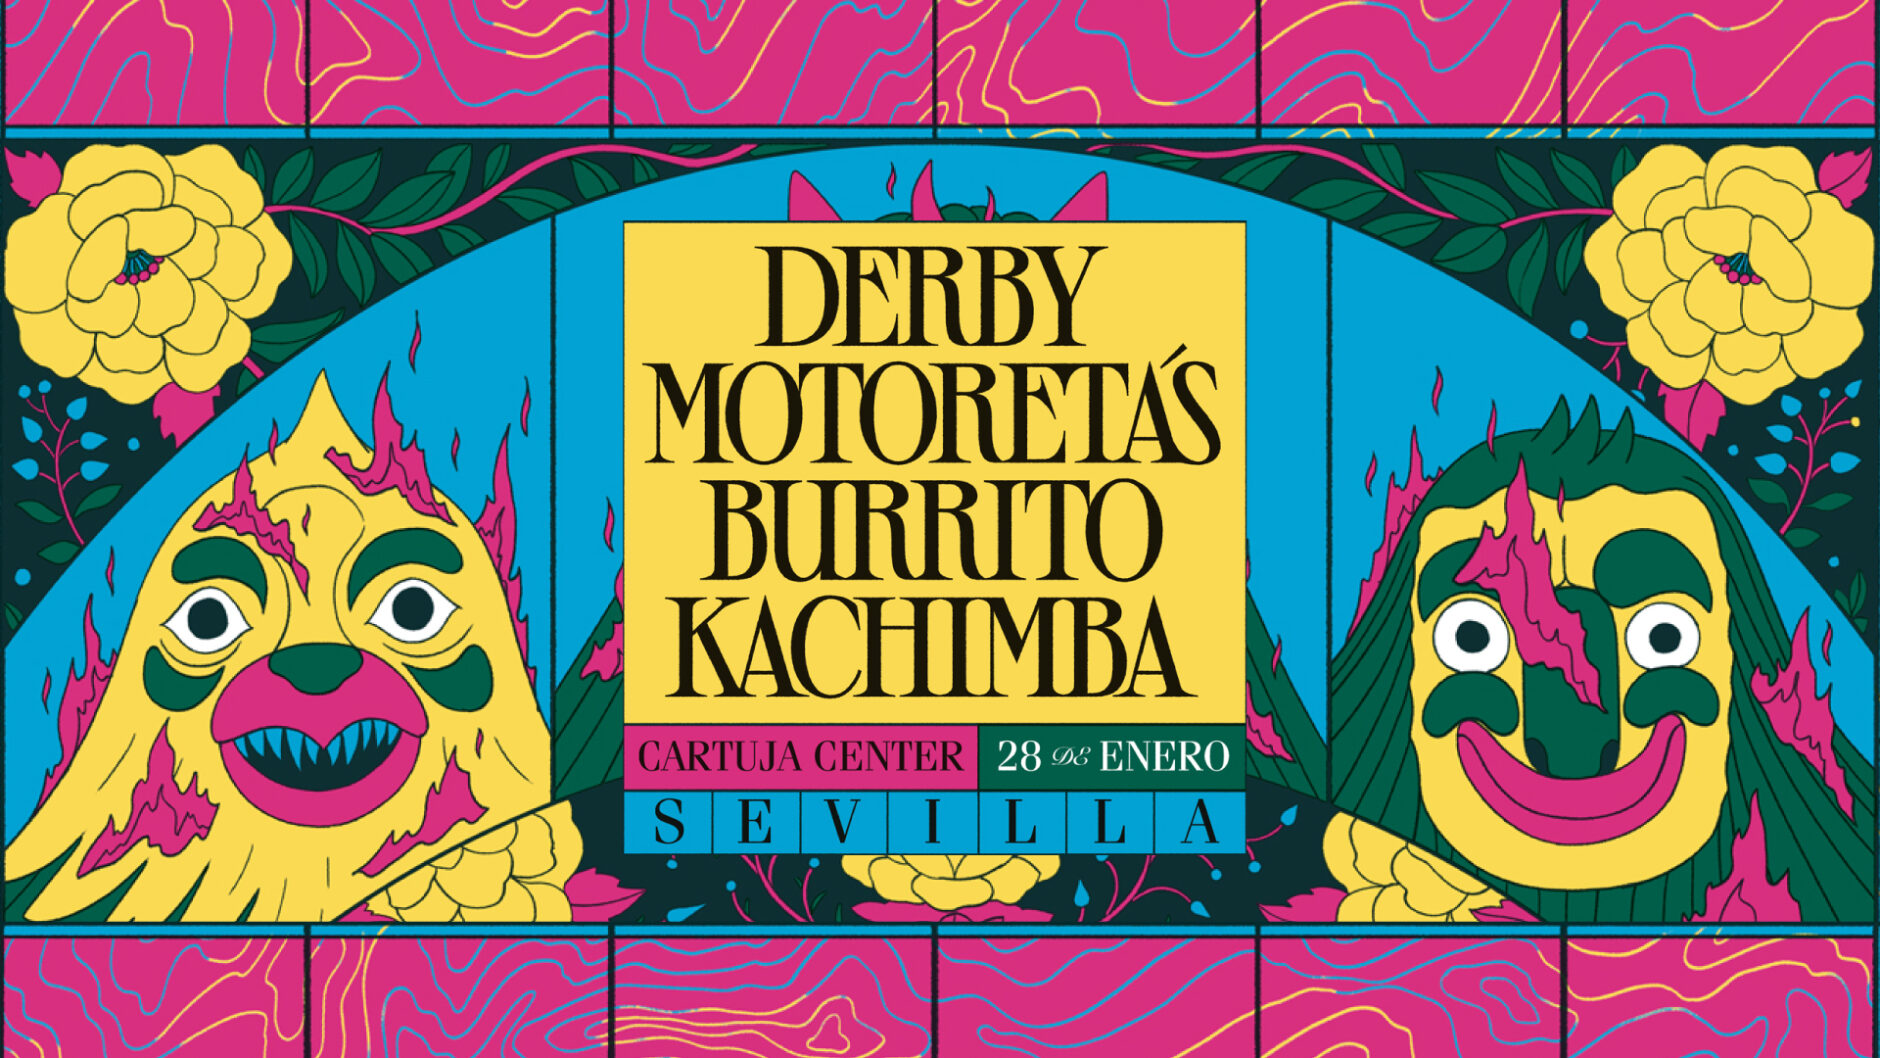 Derby Motoreta's Burrito Kachimba - Fin de gira Hilo Negro 2